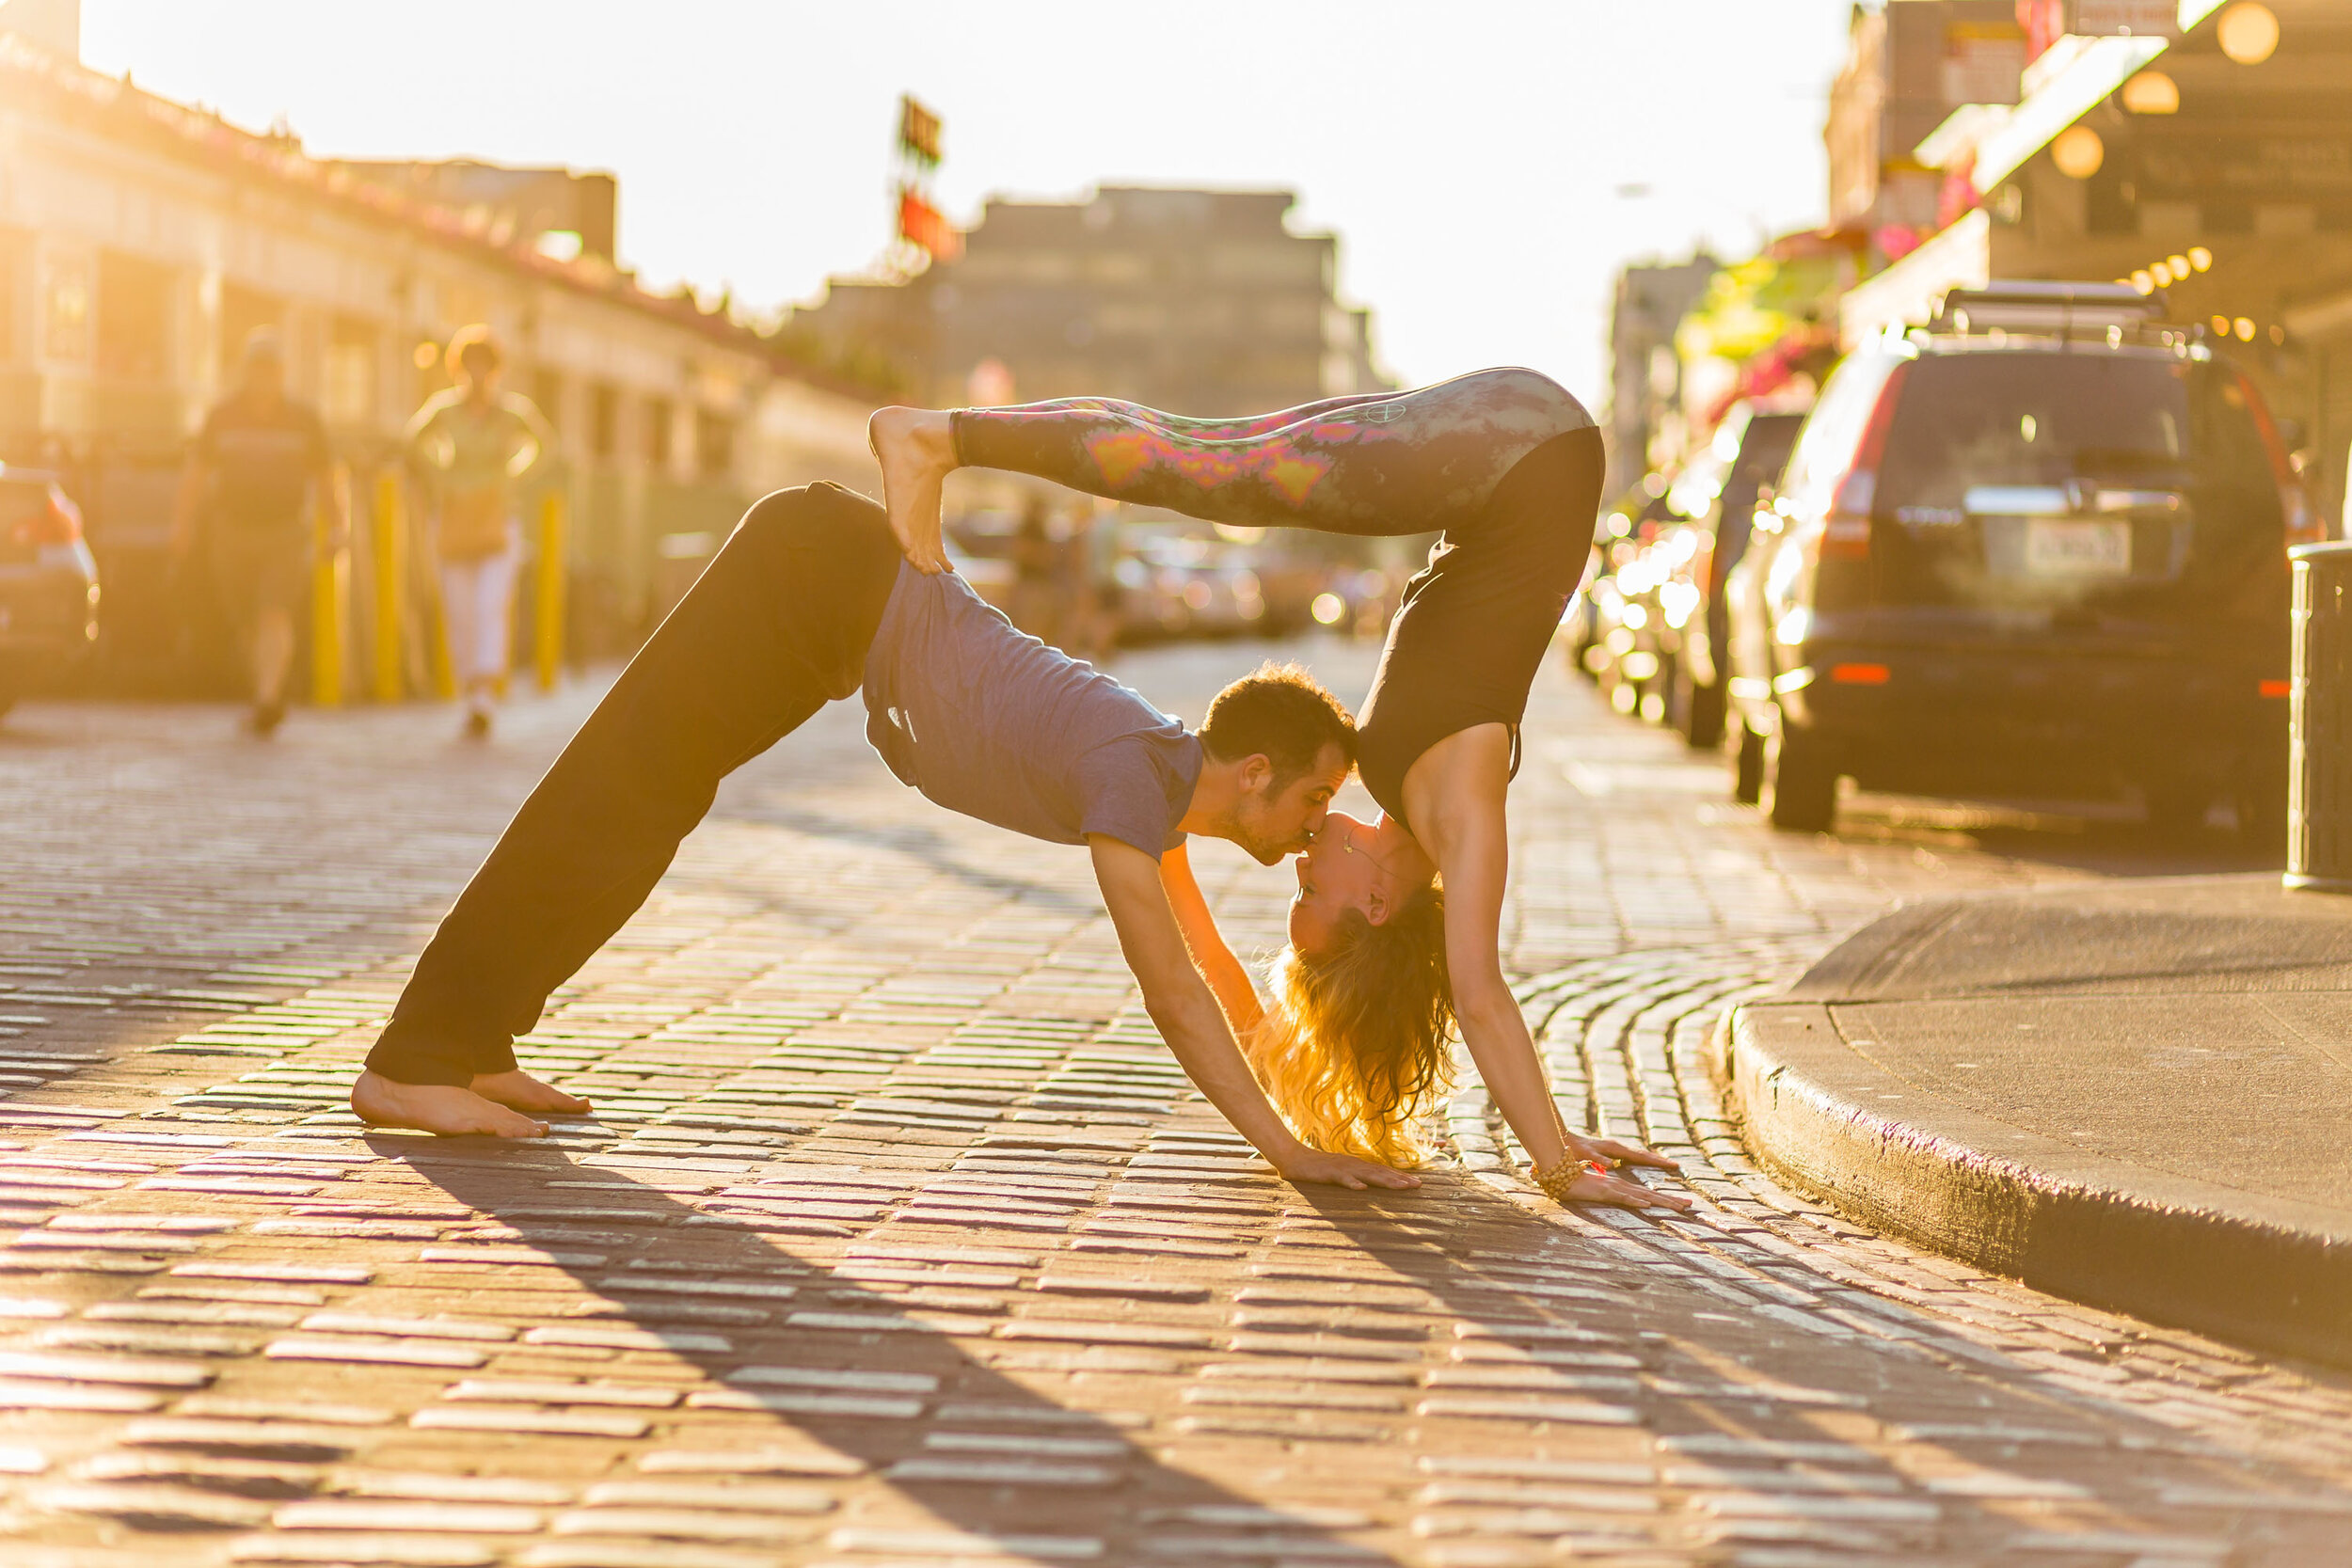  Lifestyle: Noé Khalfa and Karina Brossman practicing partners yoga at Pike Place Market in late summer light, Seattle, Washington 